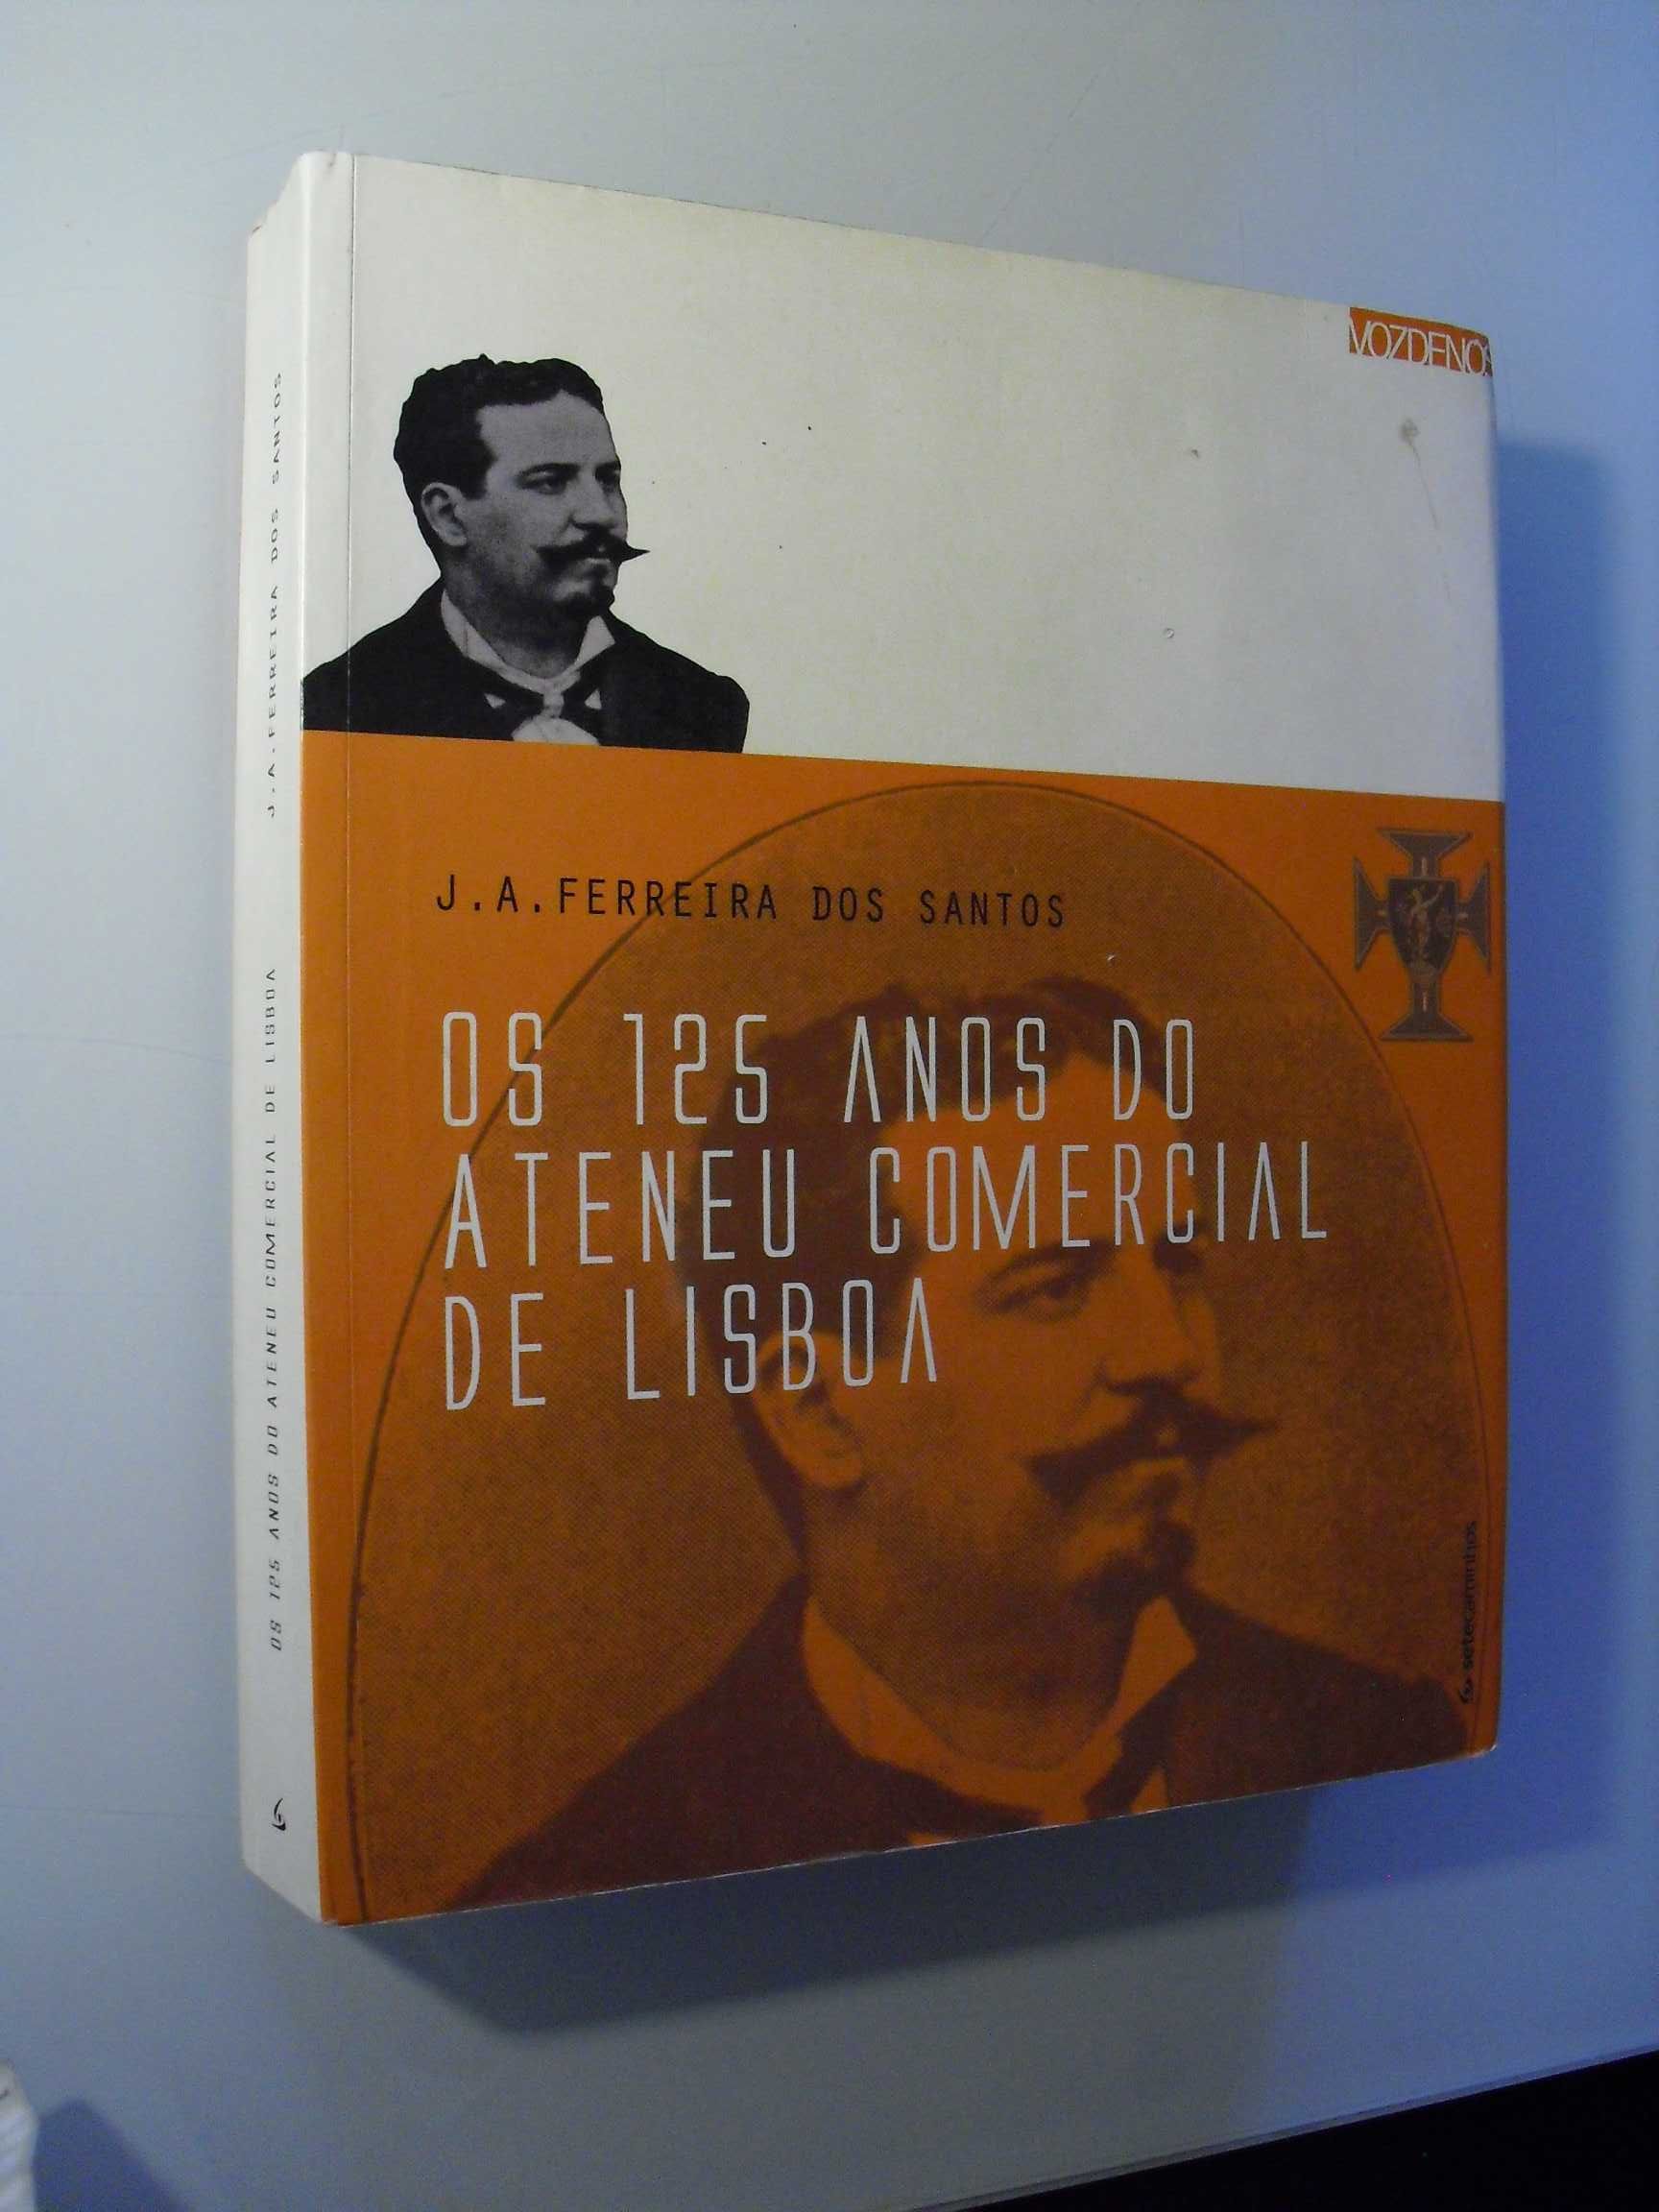 Santos (J.A.Ferreira dos);Os 125 Anos do Ateneu Comercial de Lisboa